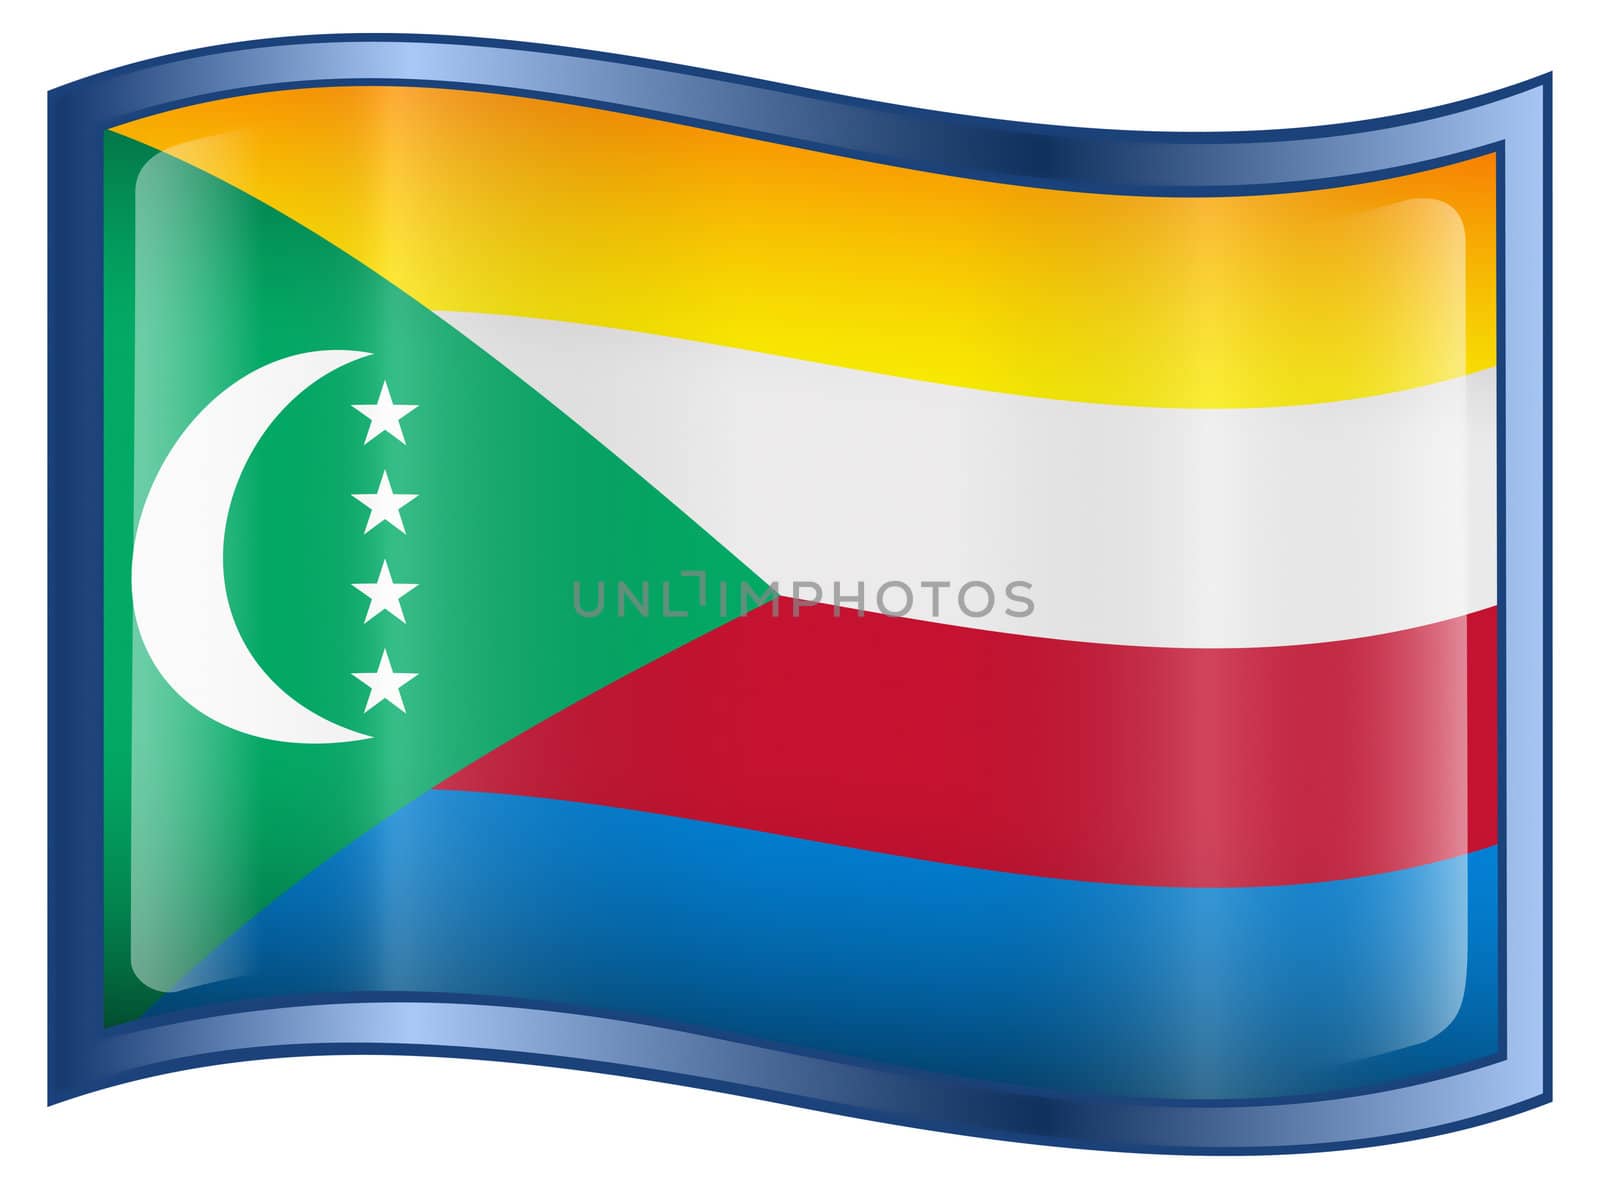 Comoros Flag icon, isolated on white background.